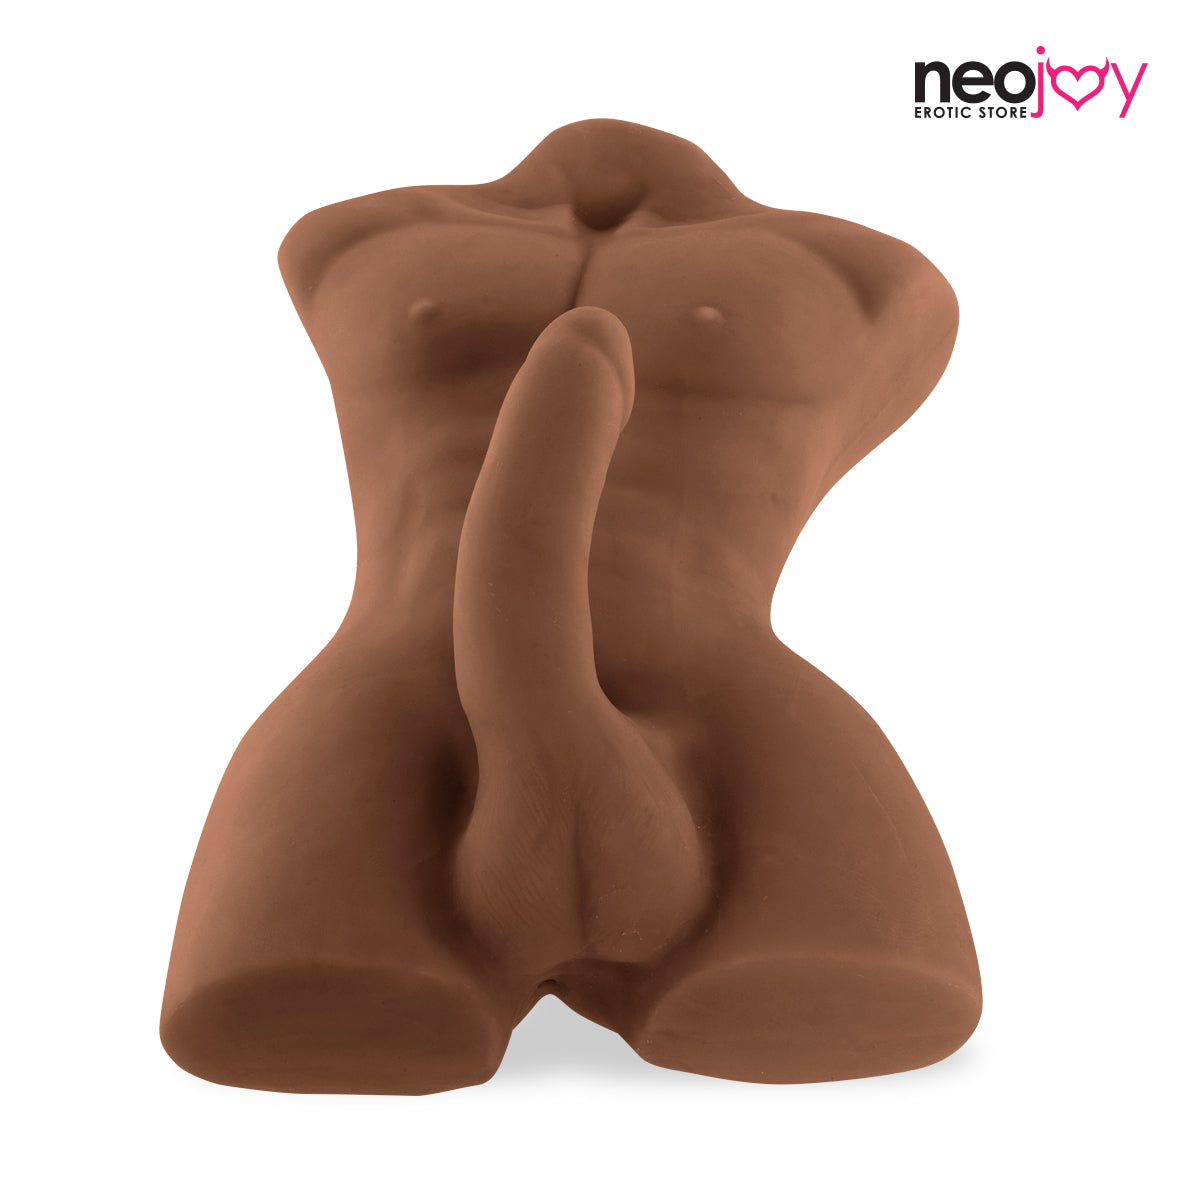 Neojoy Realistic Dildo Male Sex Doll TPE - Brown 8.9 KG